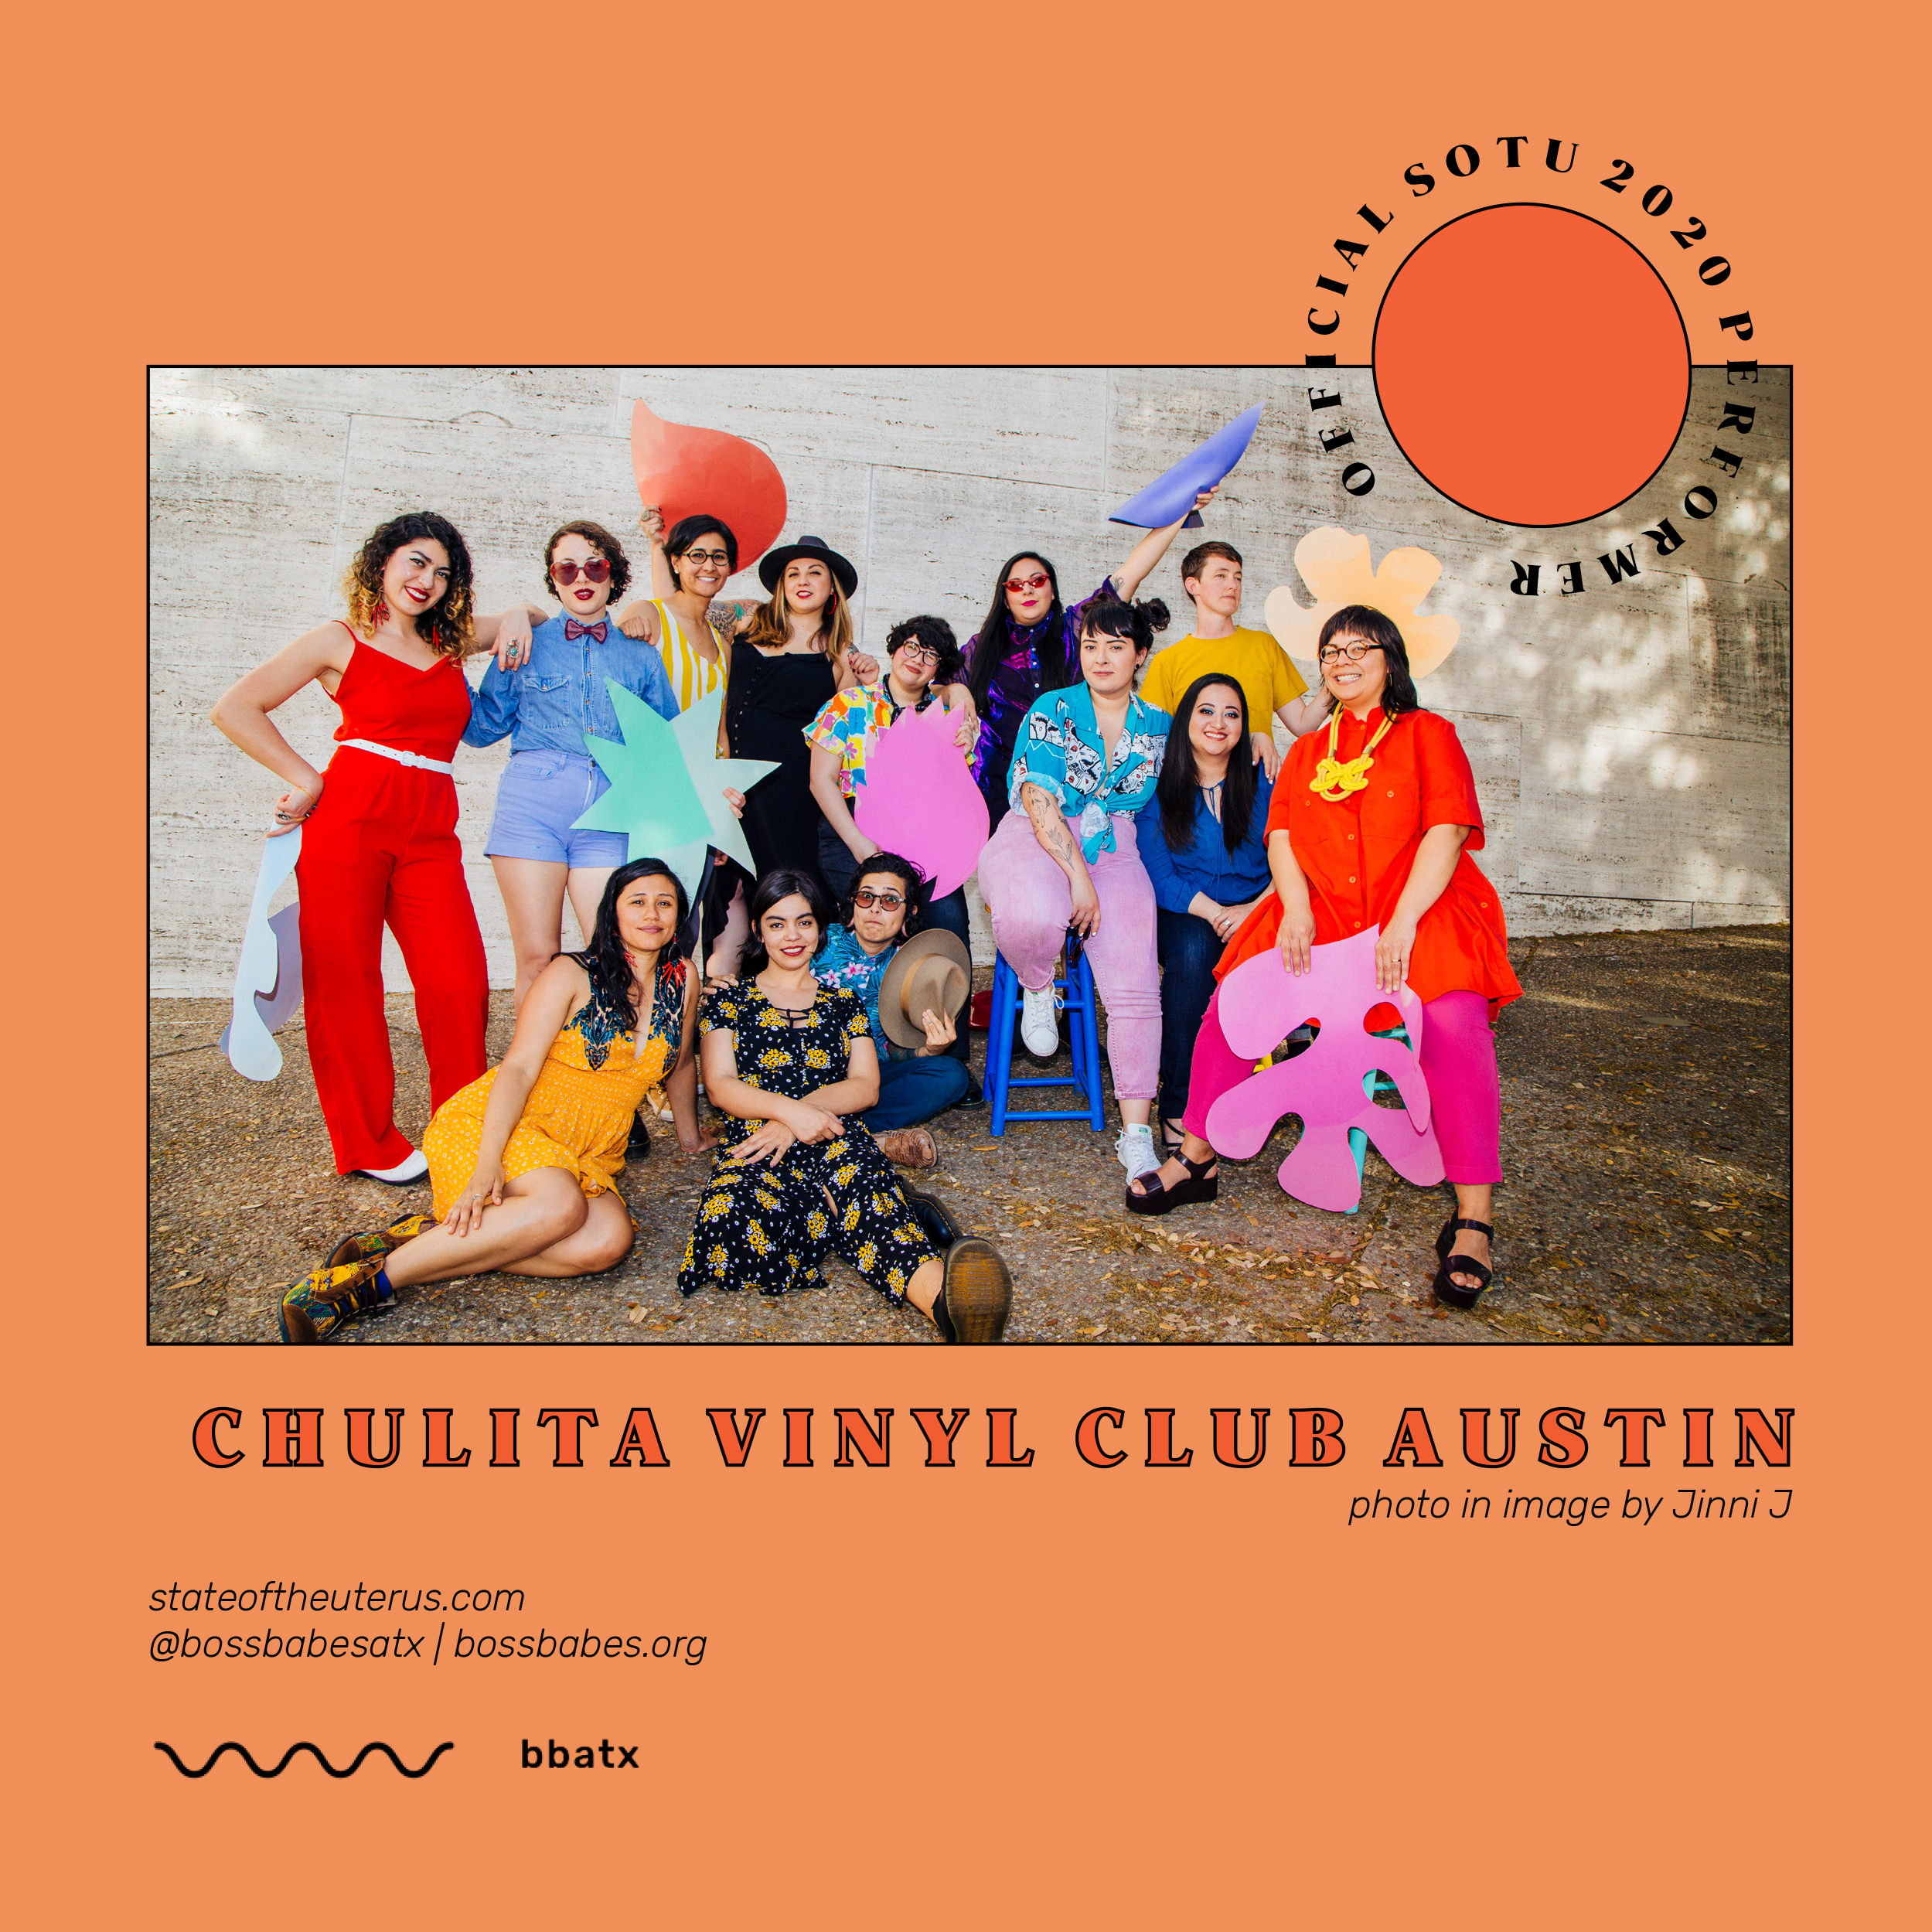 Chulita Vinyl Club Austin